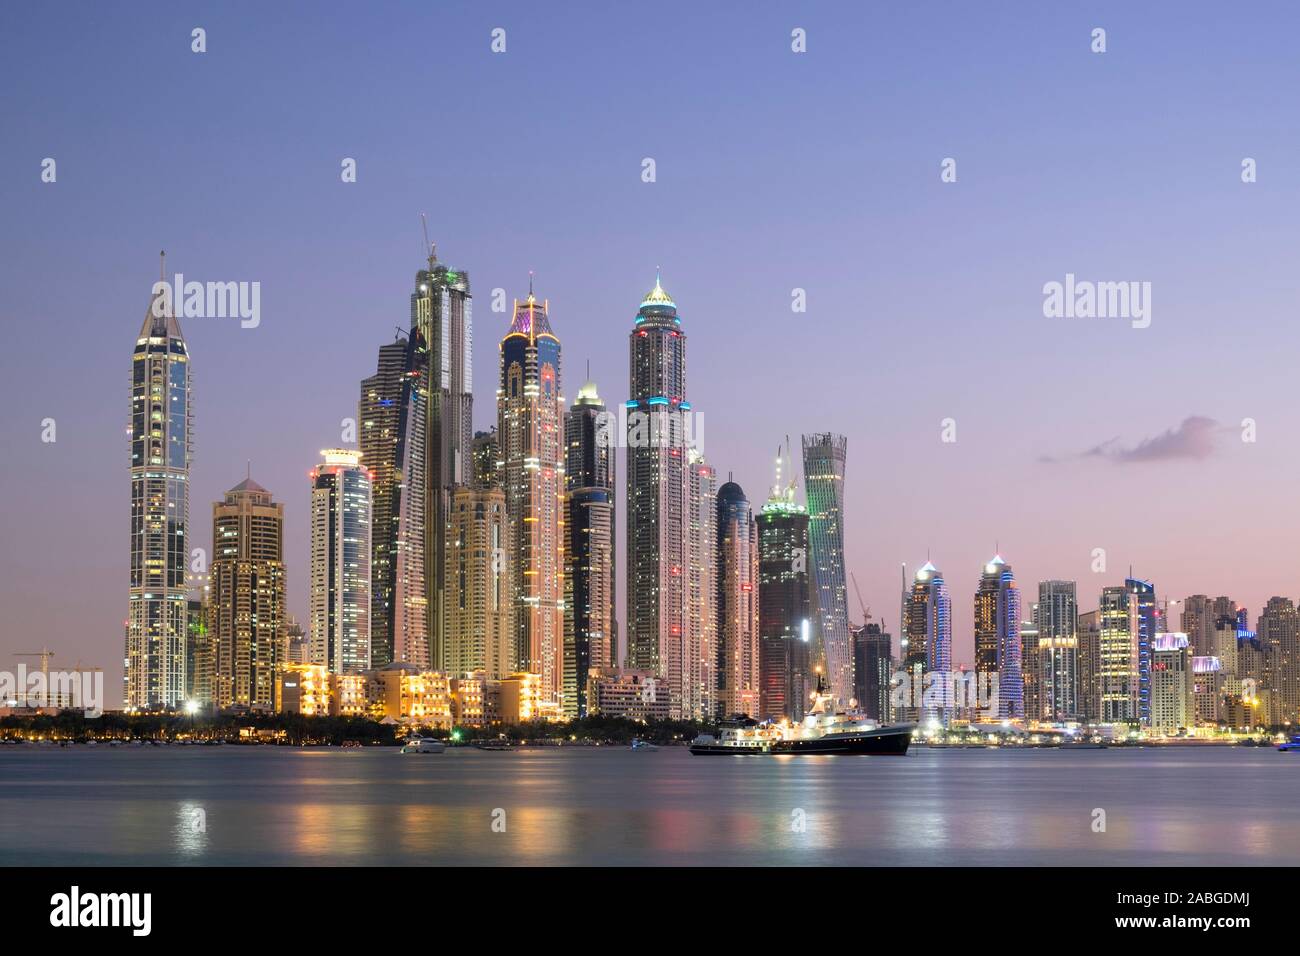 Skyline of skyscrapers at dusk  at Marina district in Dubai United Arab Emirates Stock Photo